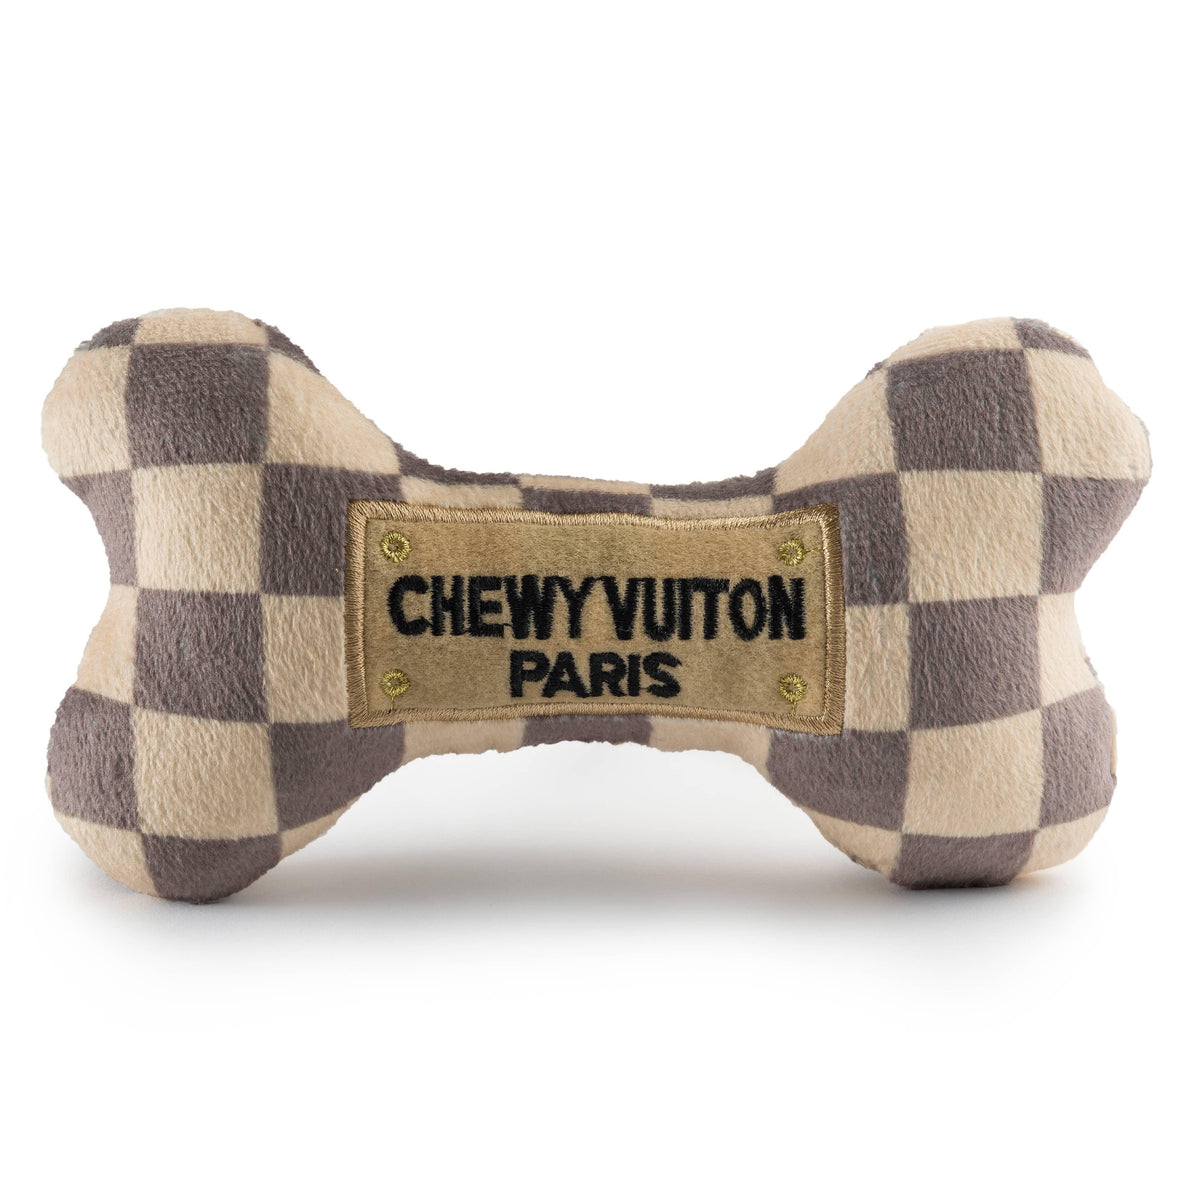 Hundespielzeug Chewy Vuiton Tasche